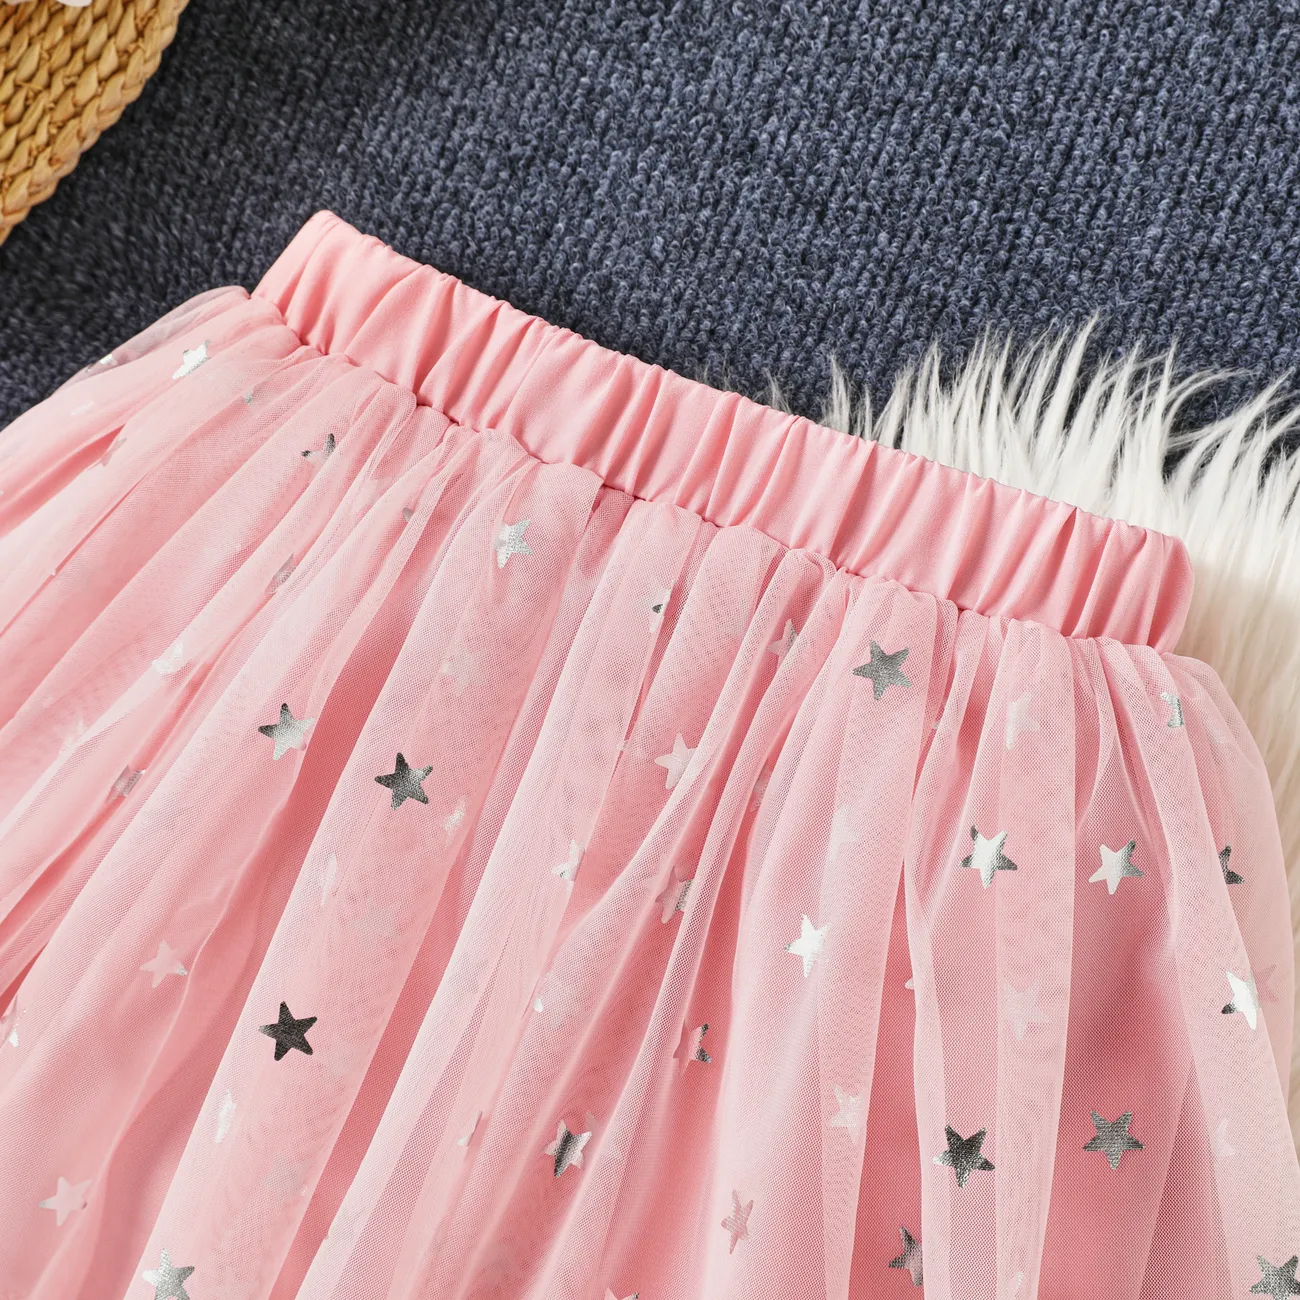 Sweet Oversized Multi-layered Stars Skirt for Girls - 100% Polyester Pink big image 1